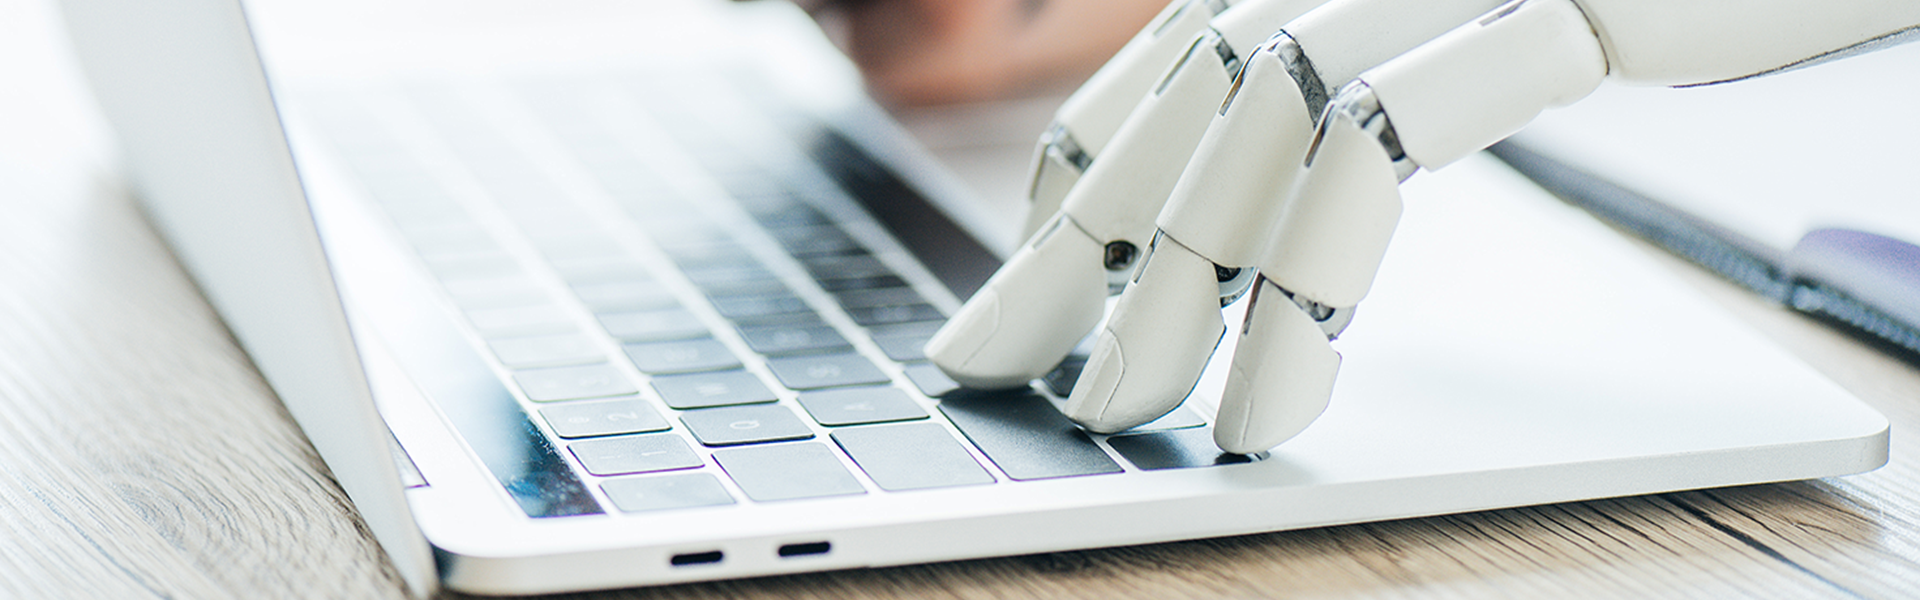 Robot And Human On Keyboard Heading